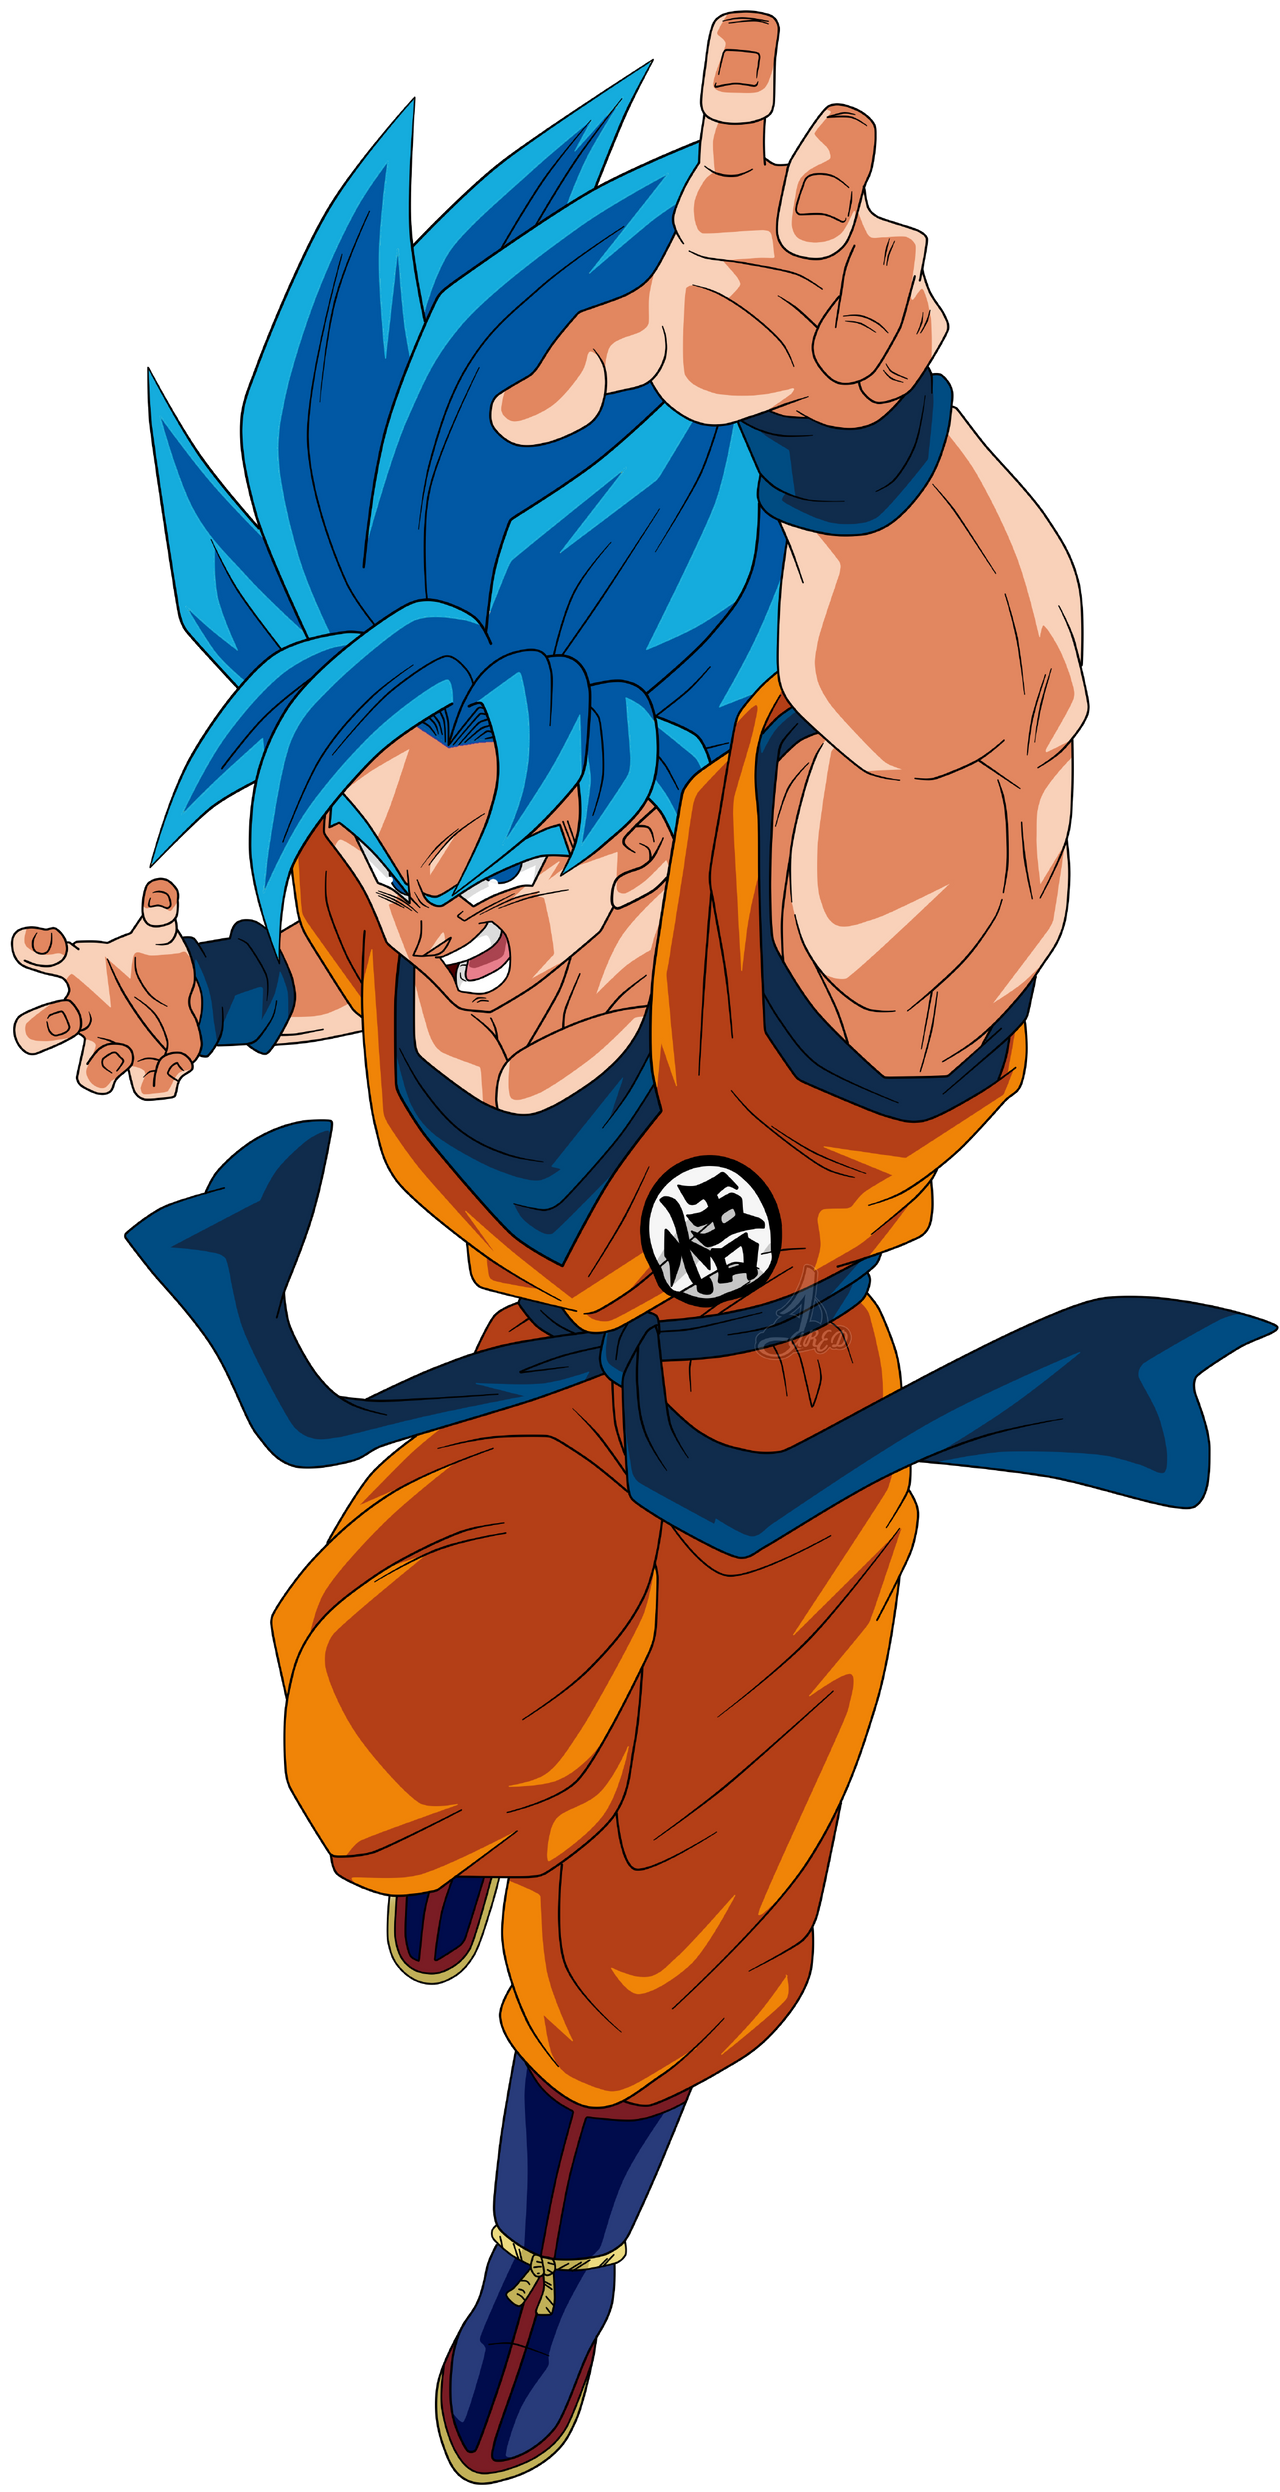 File:NYCC 2016 - Super Saiyan Blue Goku (30227483945).jpg - Wikipedia